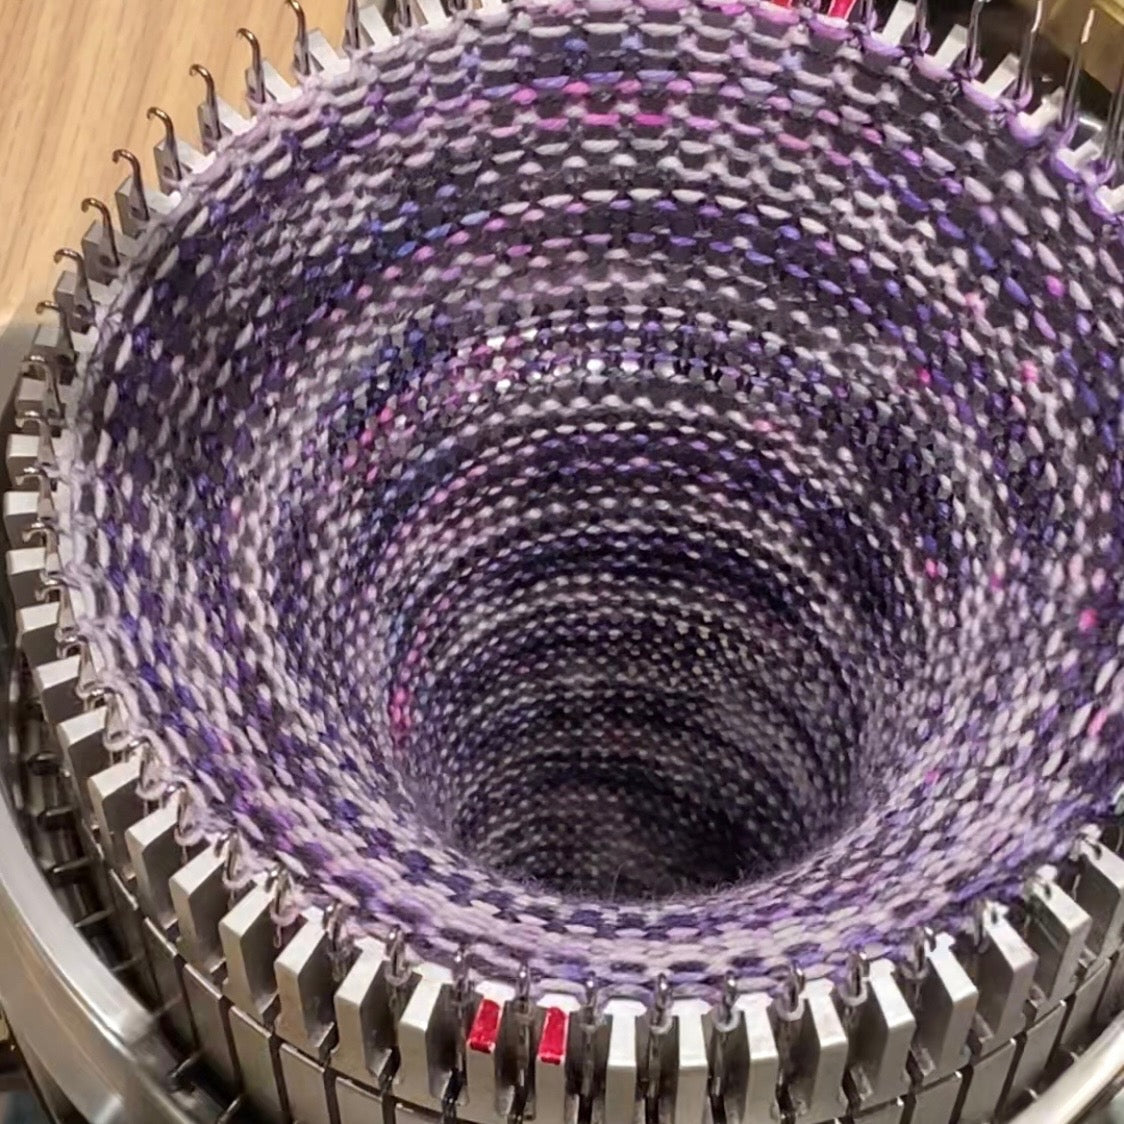 yarn being knit into a sock tube on a circular knitting machine